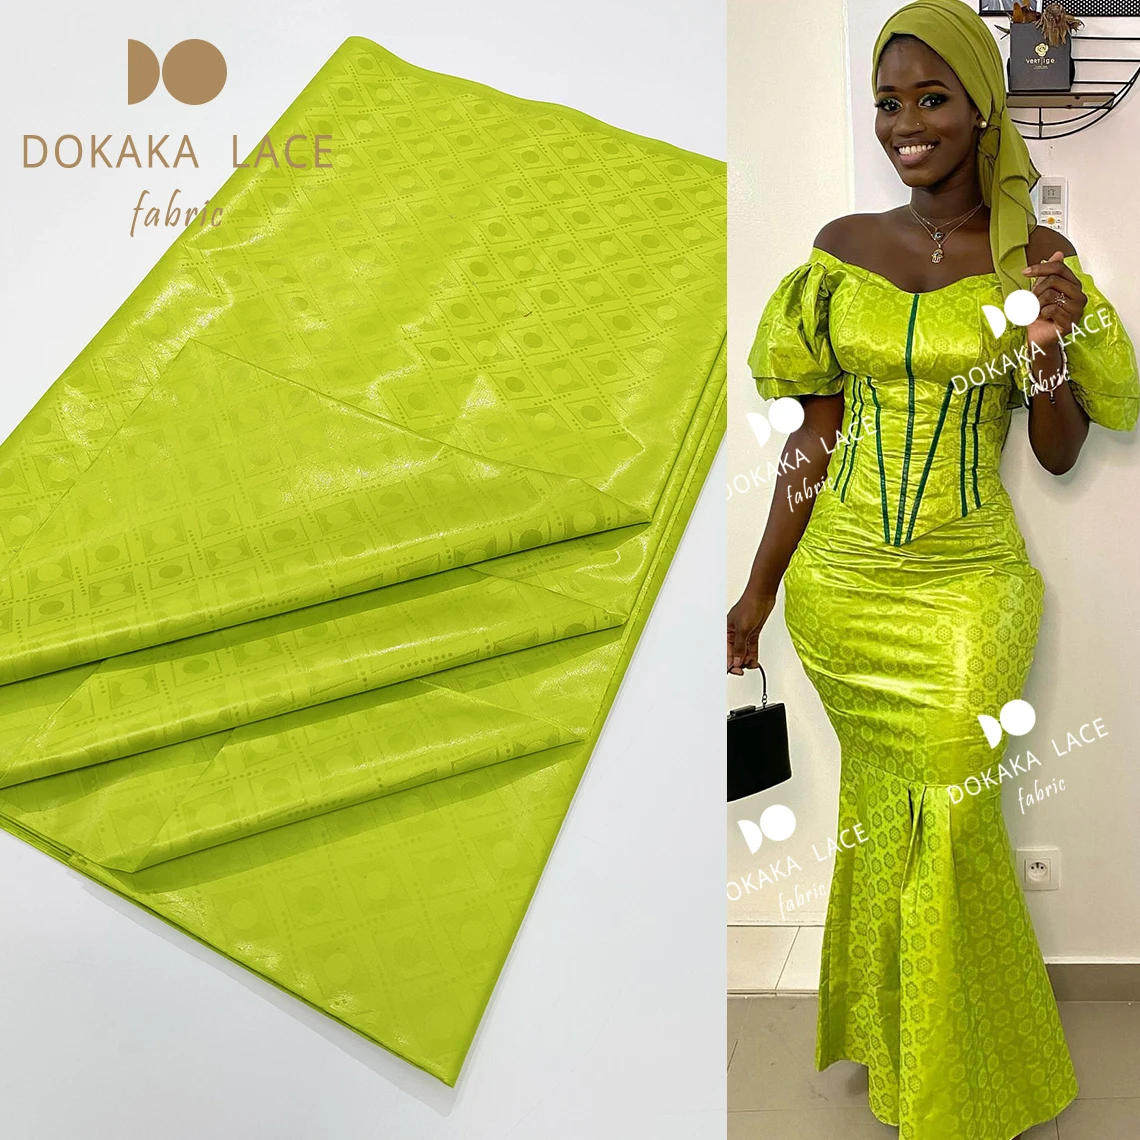 

5 Yards Luxury Green Shining Basin Riche Fabric 27 Color Austria Quality High Quality Guinea Brocade Shadda Fabric For Wedding